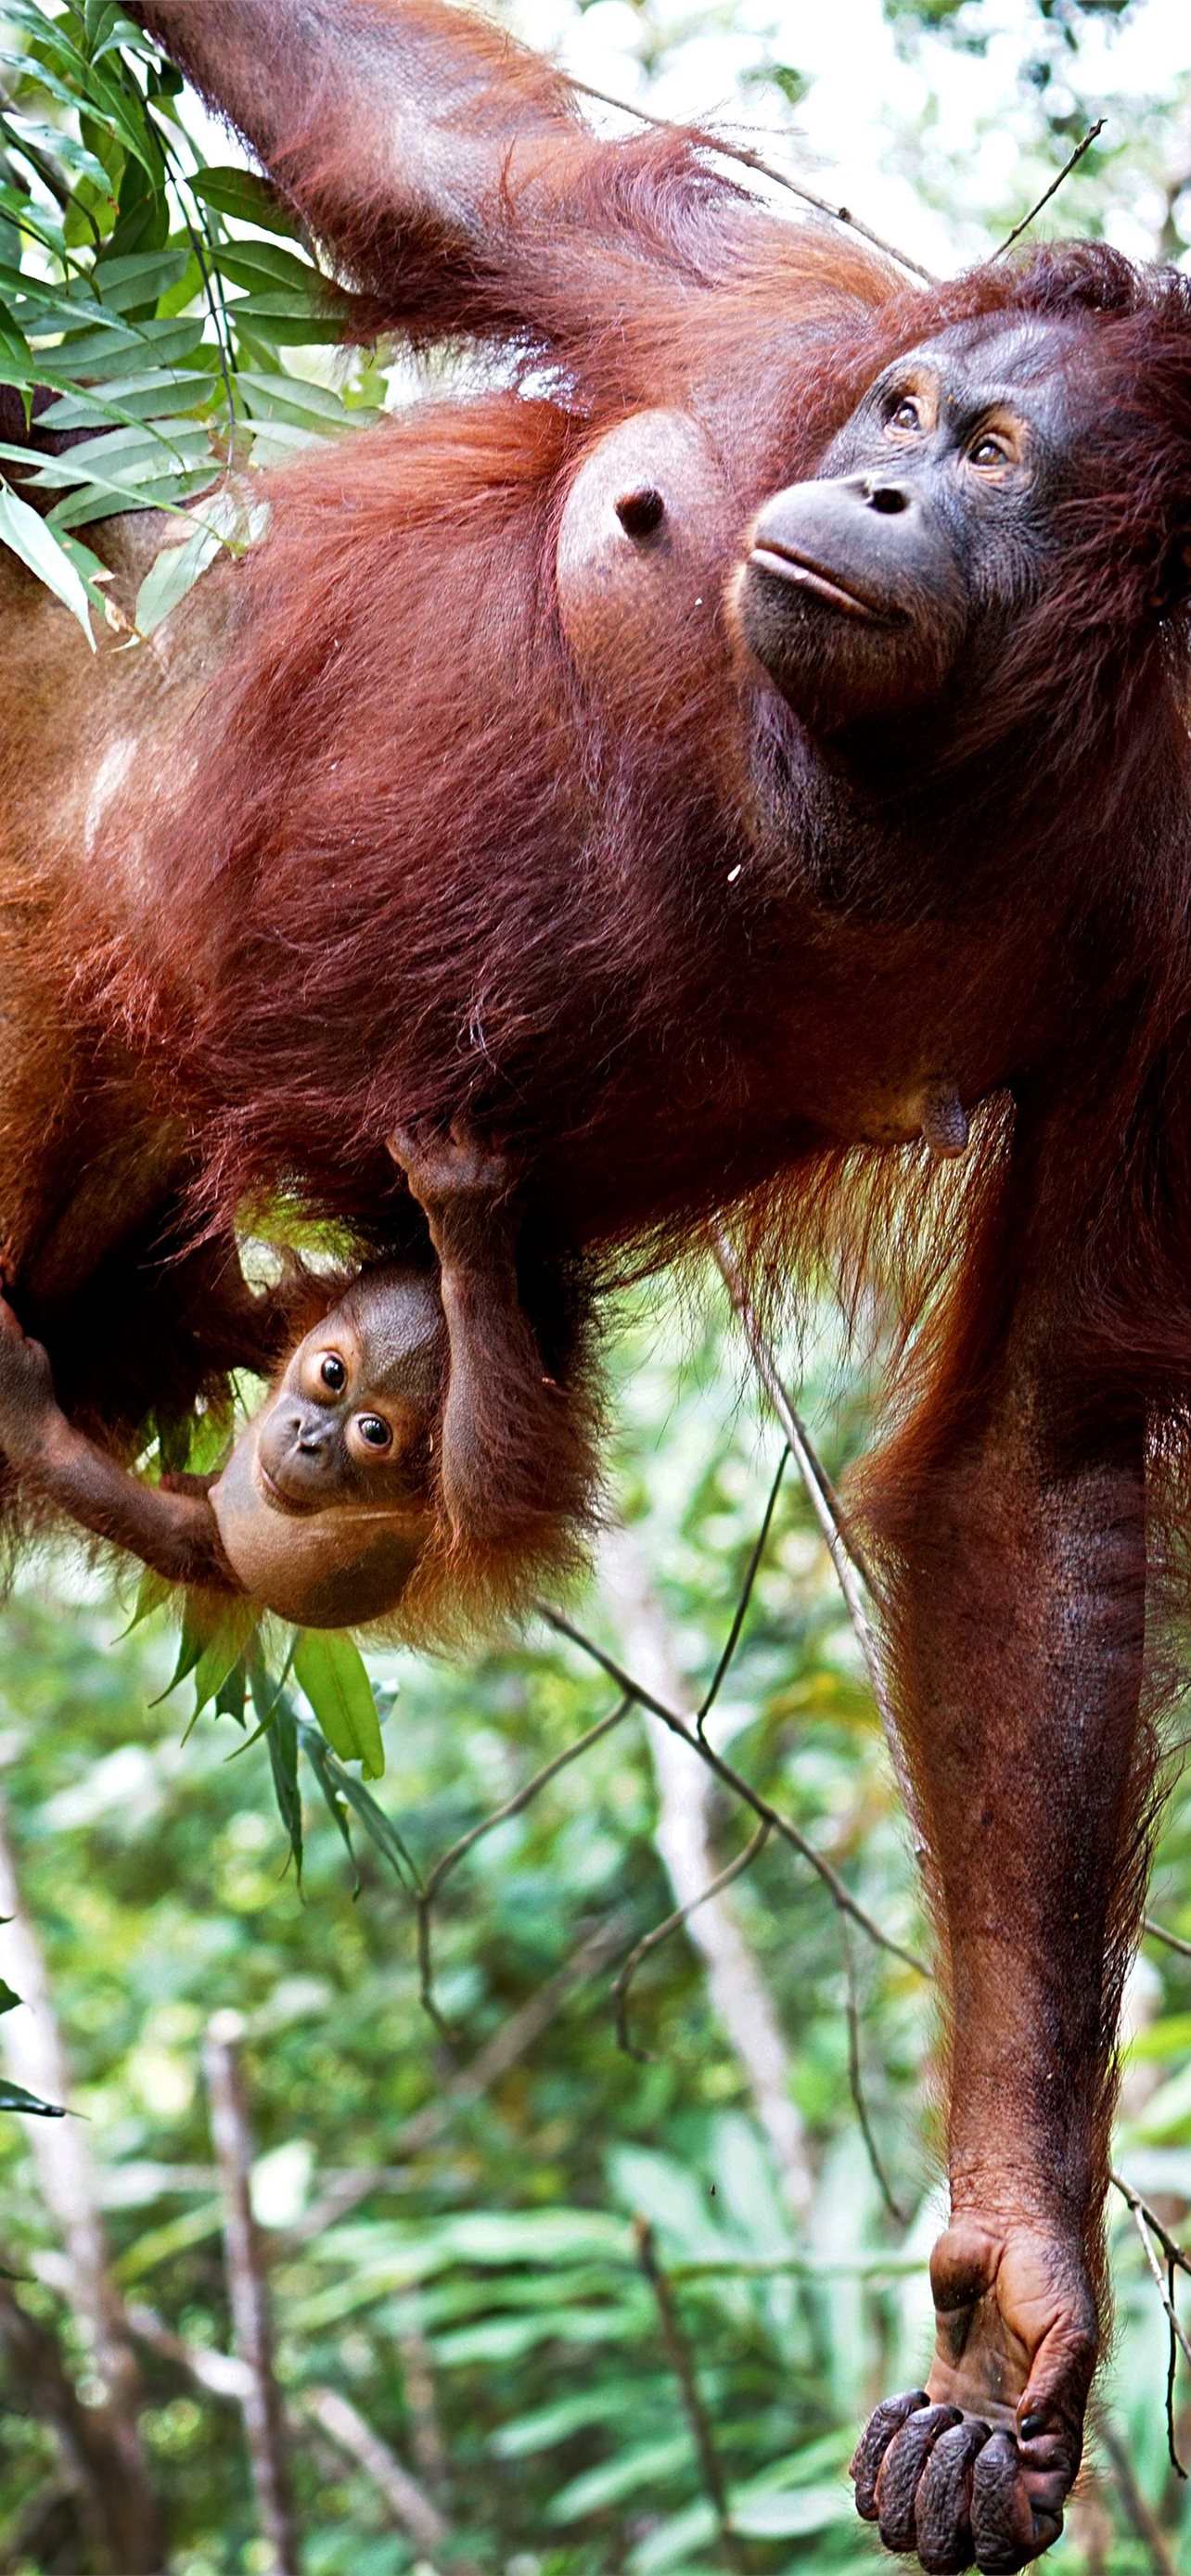 1000 Orangutan Pictures  Download Free Images on Unsplash